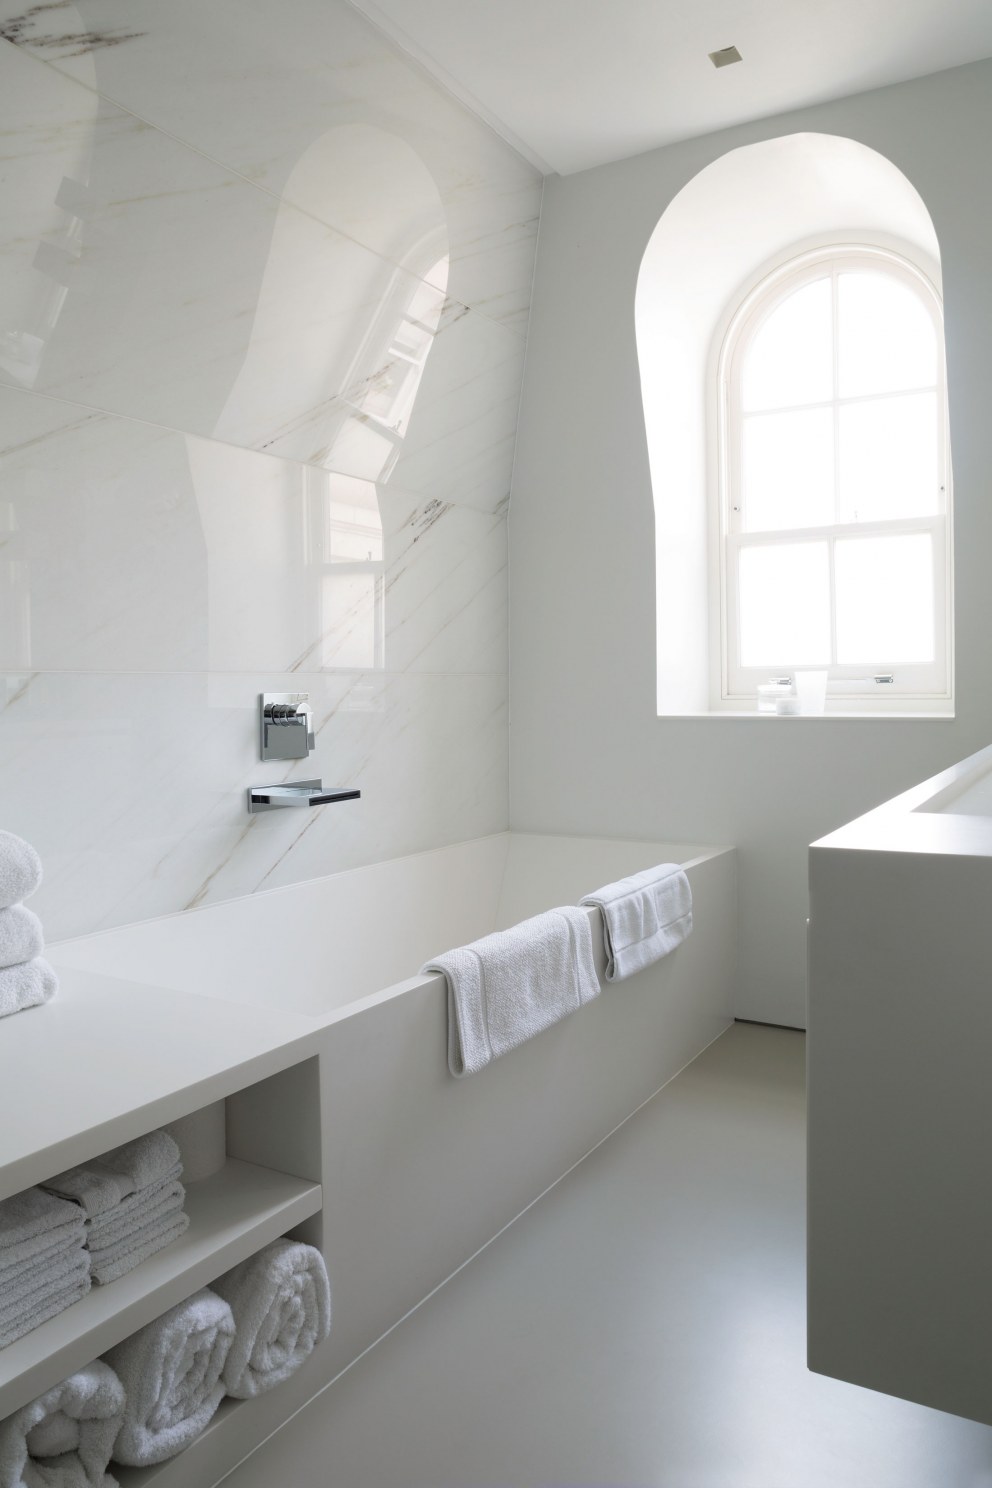 Maida Vale | Master Bathroom | Interior Designers